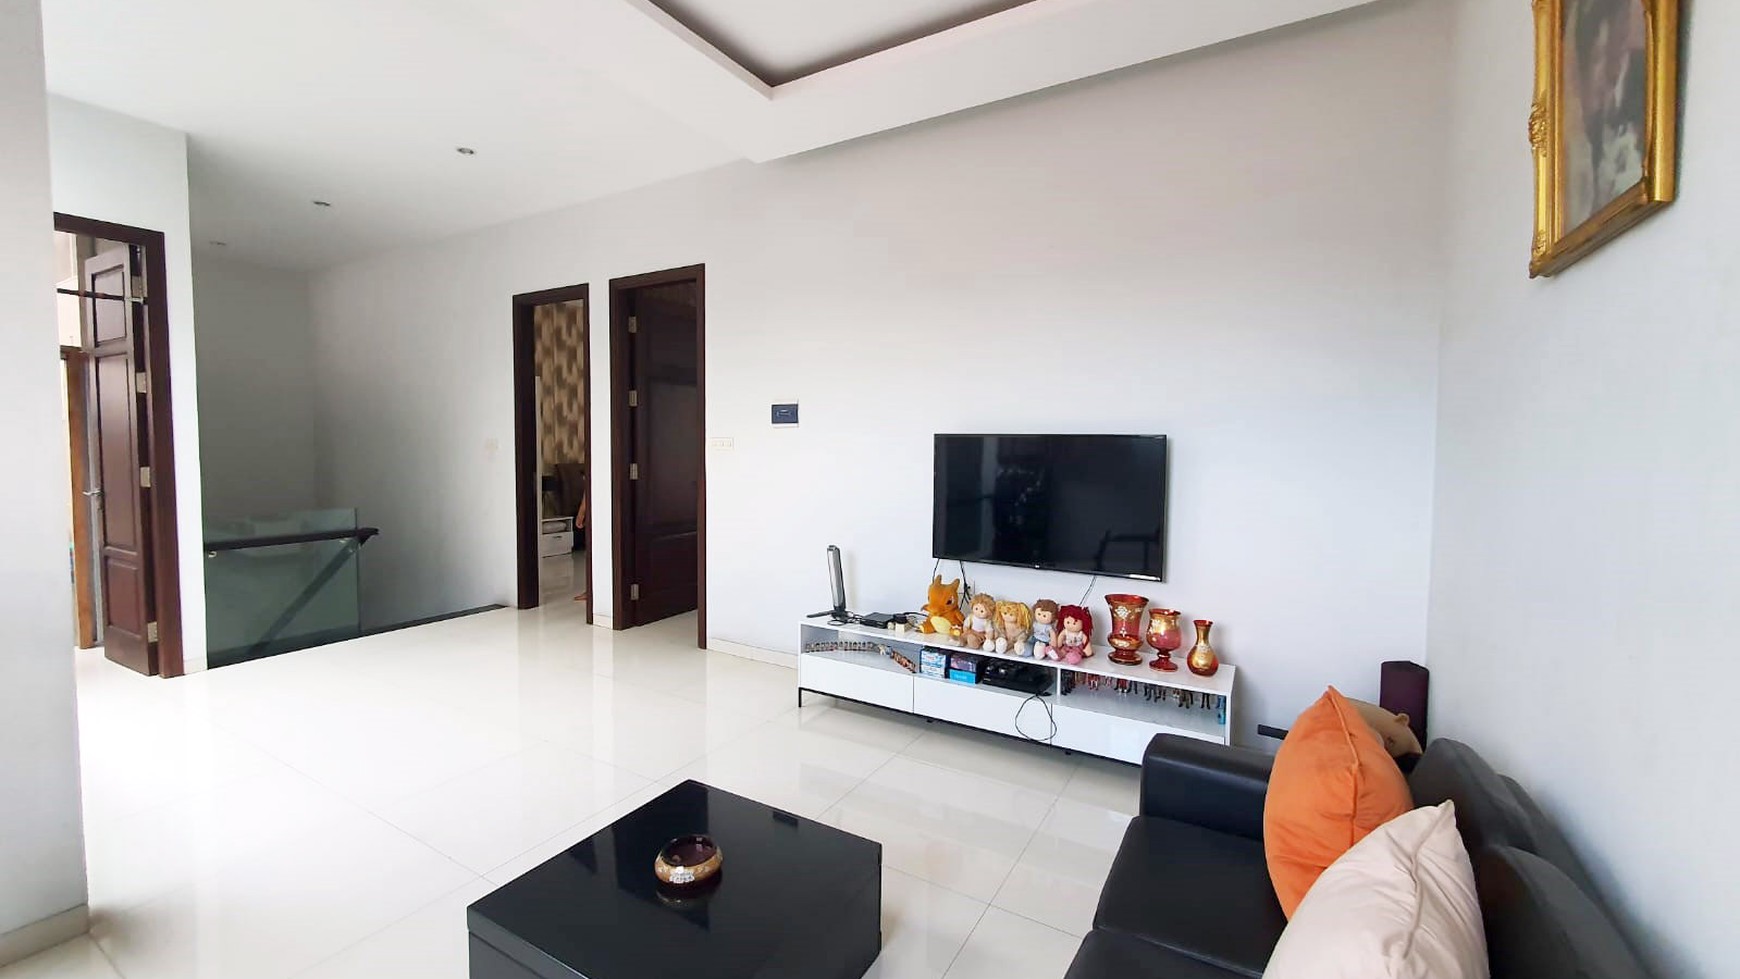 Rumah di Klampis Semolo Timur Surabaya, Minimalis, 2 Lantai, Siap Huni, Lokasi Jalan Raya Kembar